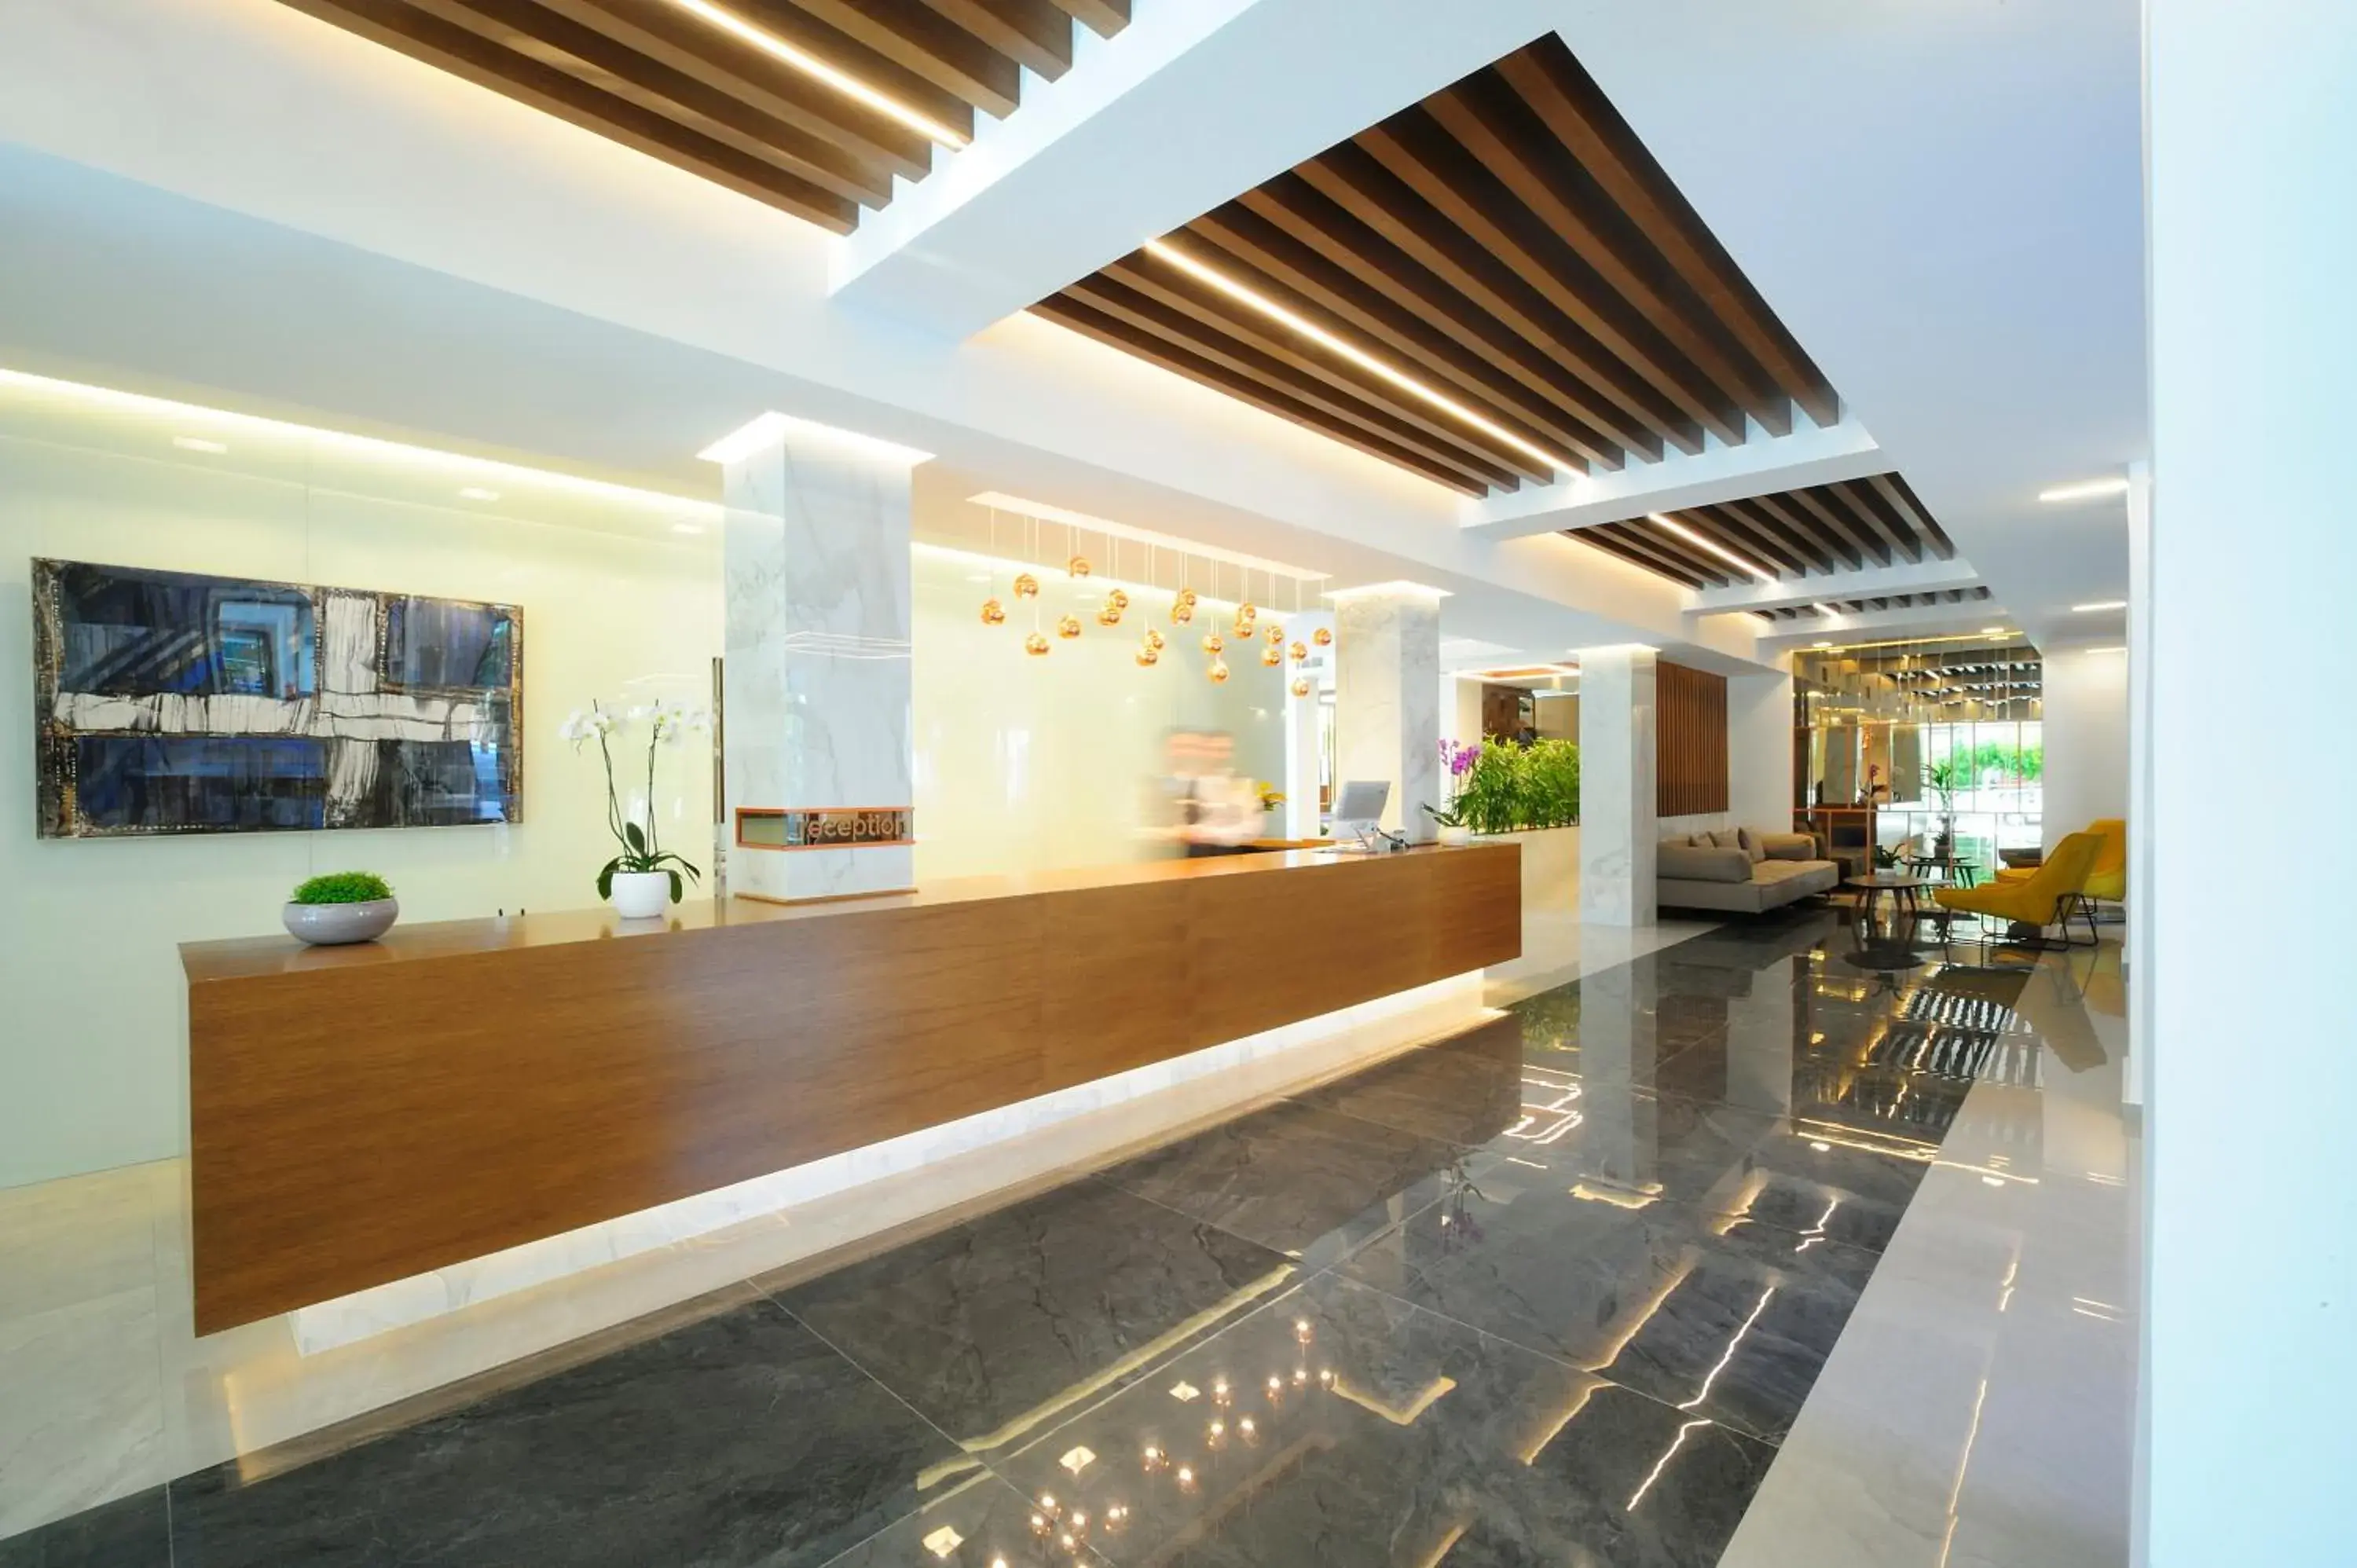 Lobby or reception in Atrium Ambiance Hotel